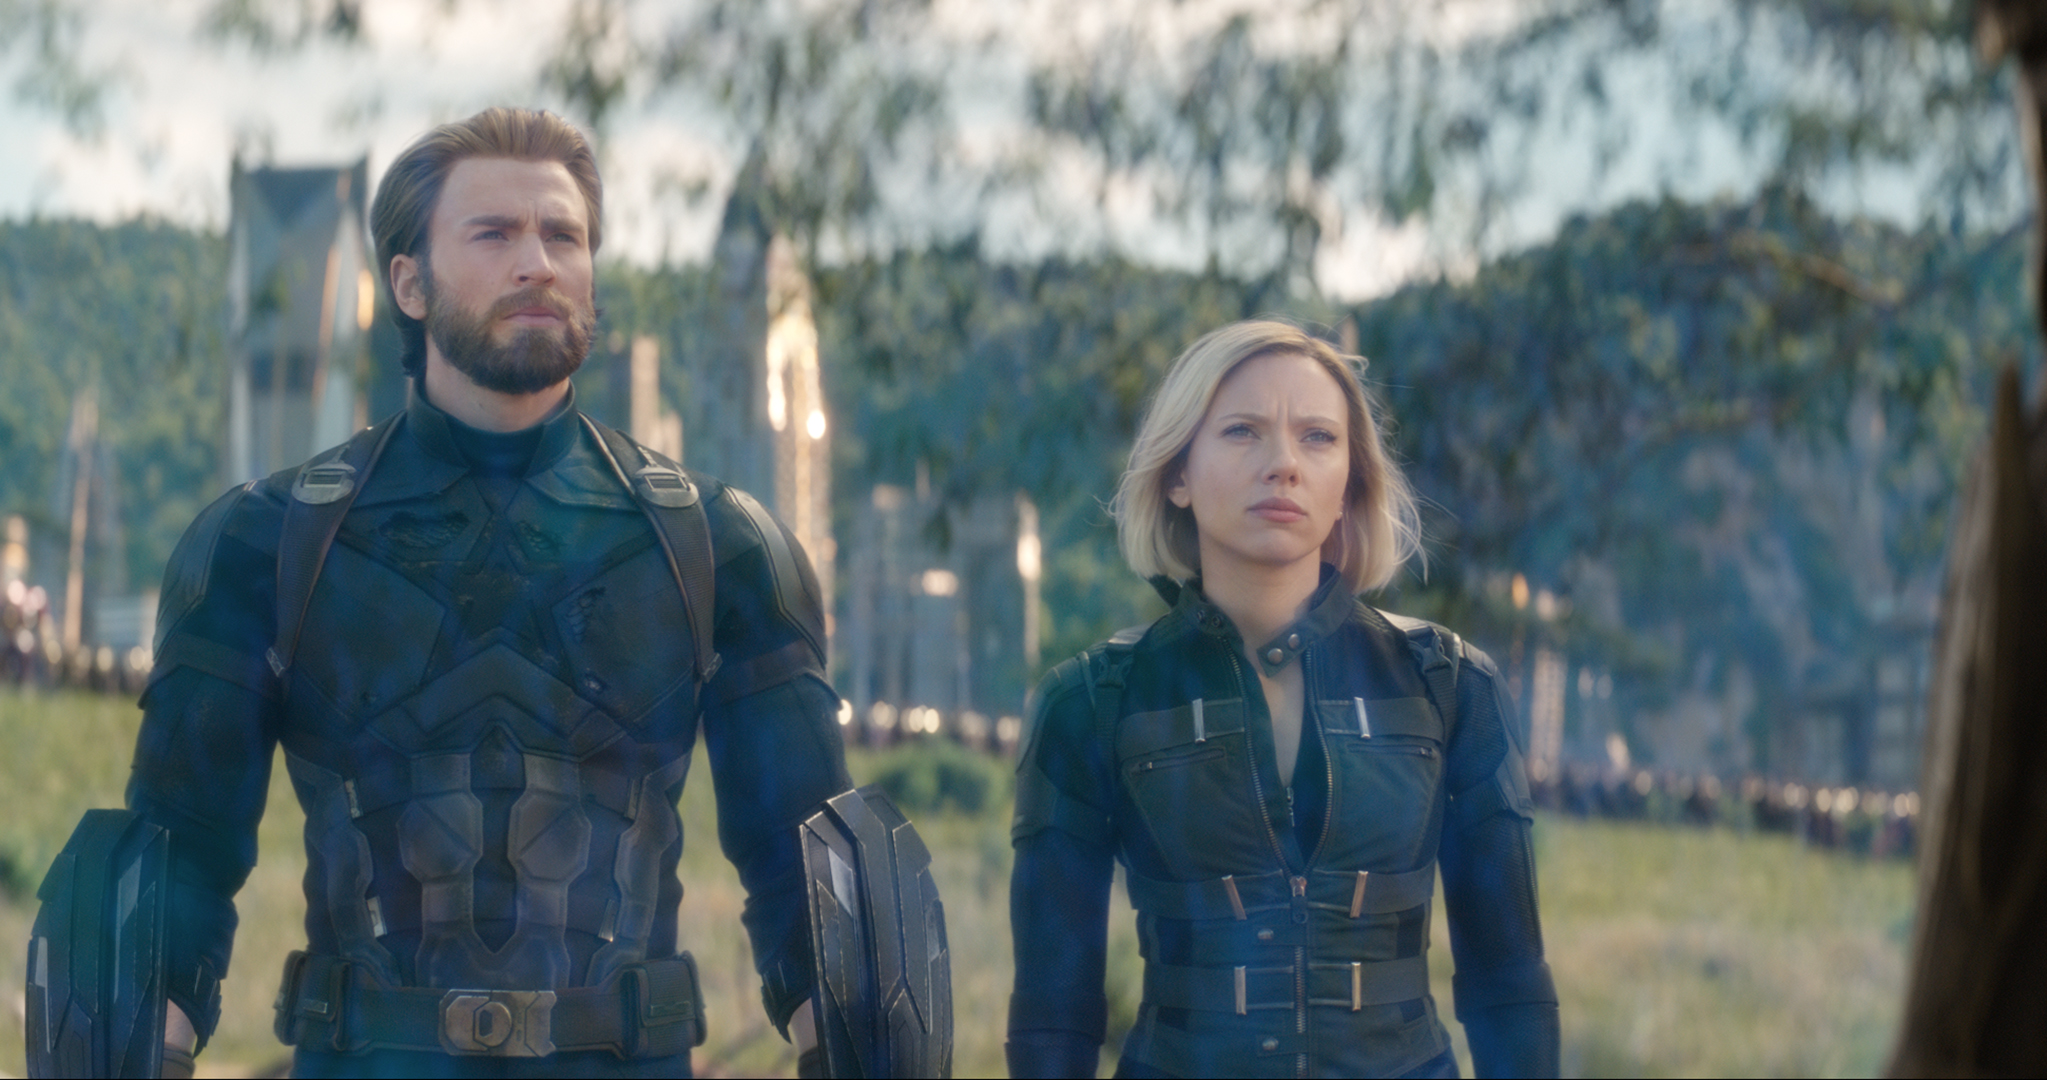 Captain America/Steve Rogers (Chris Evans) and Black Widow/Natasha Romanoff (Scarlett Johansson) in Avengres: Infinity War (Marvel Studios)